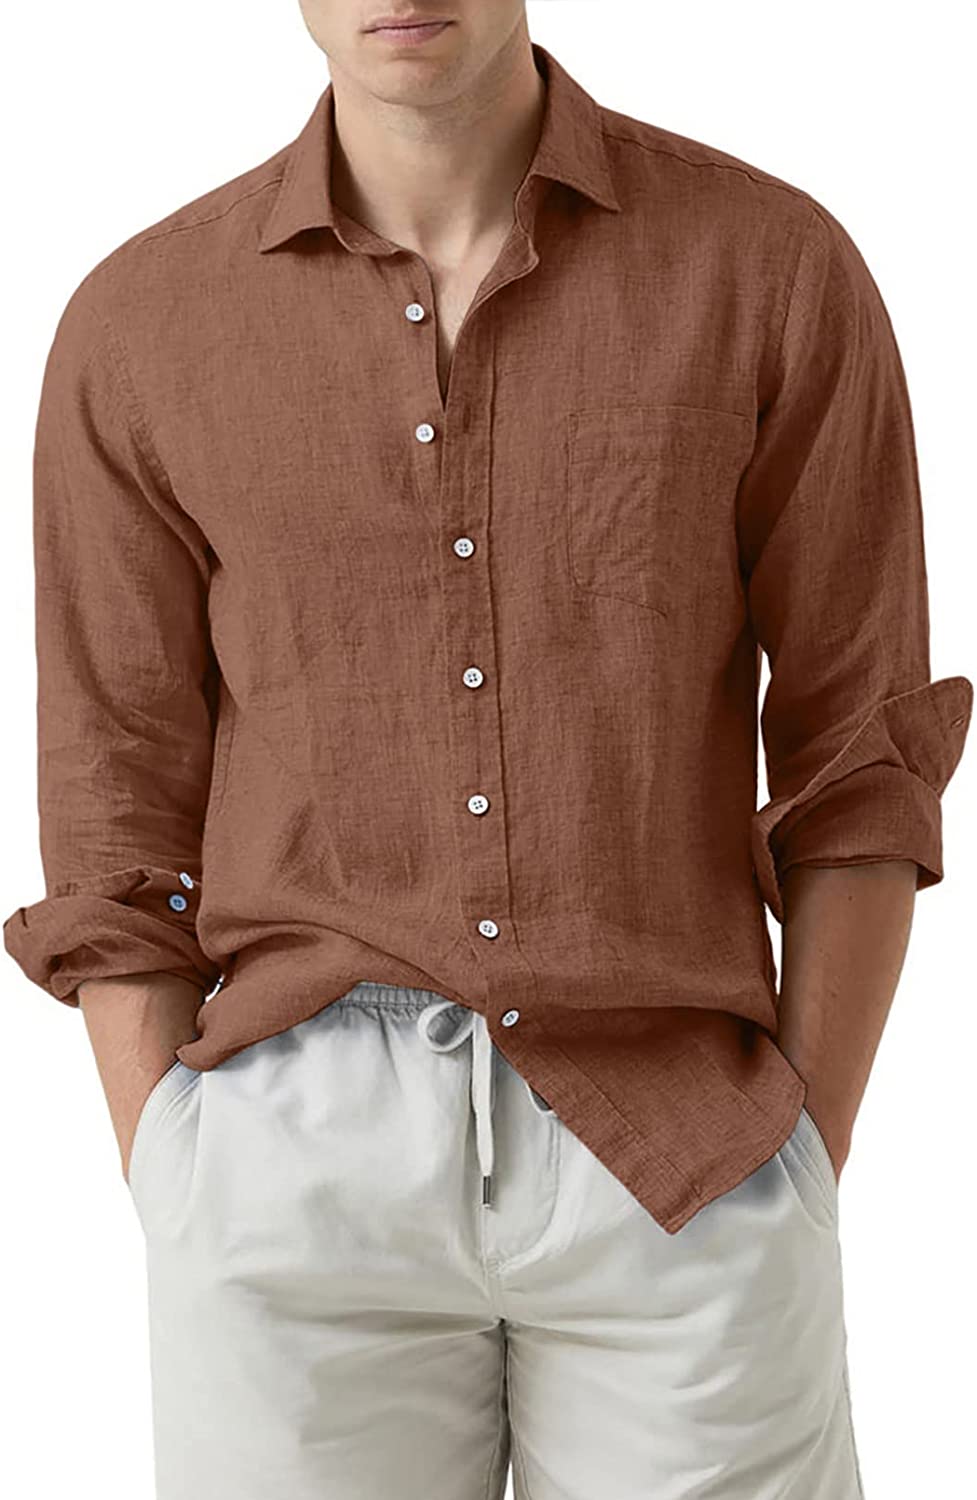 JMIERR Men's Cotton Linen Casual Stylish Button Down Shirt Long Sleeve  Dress Shirts